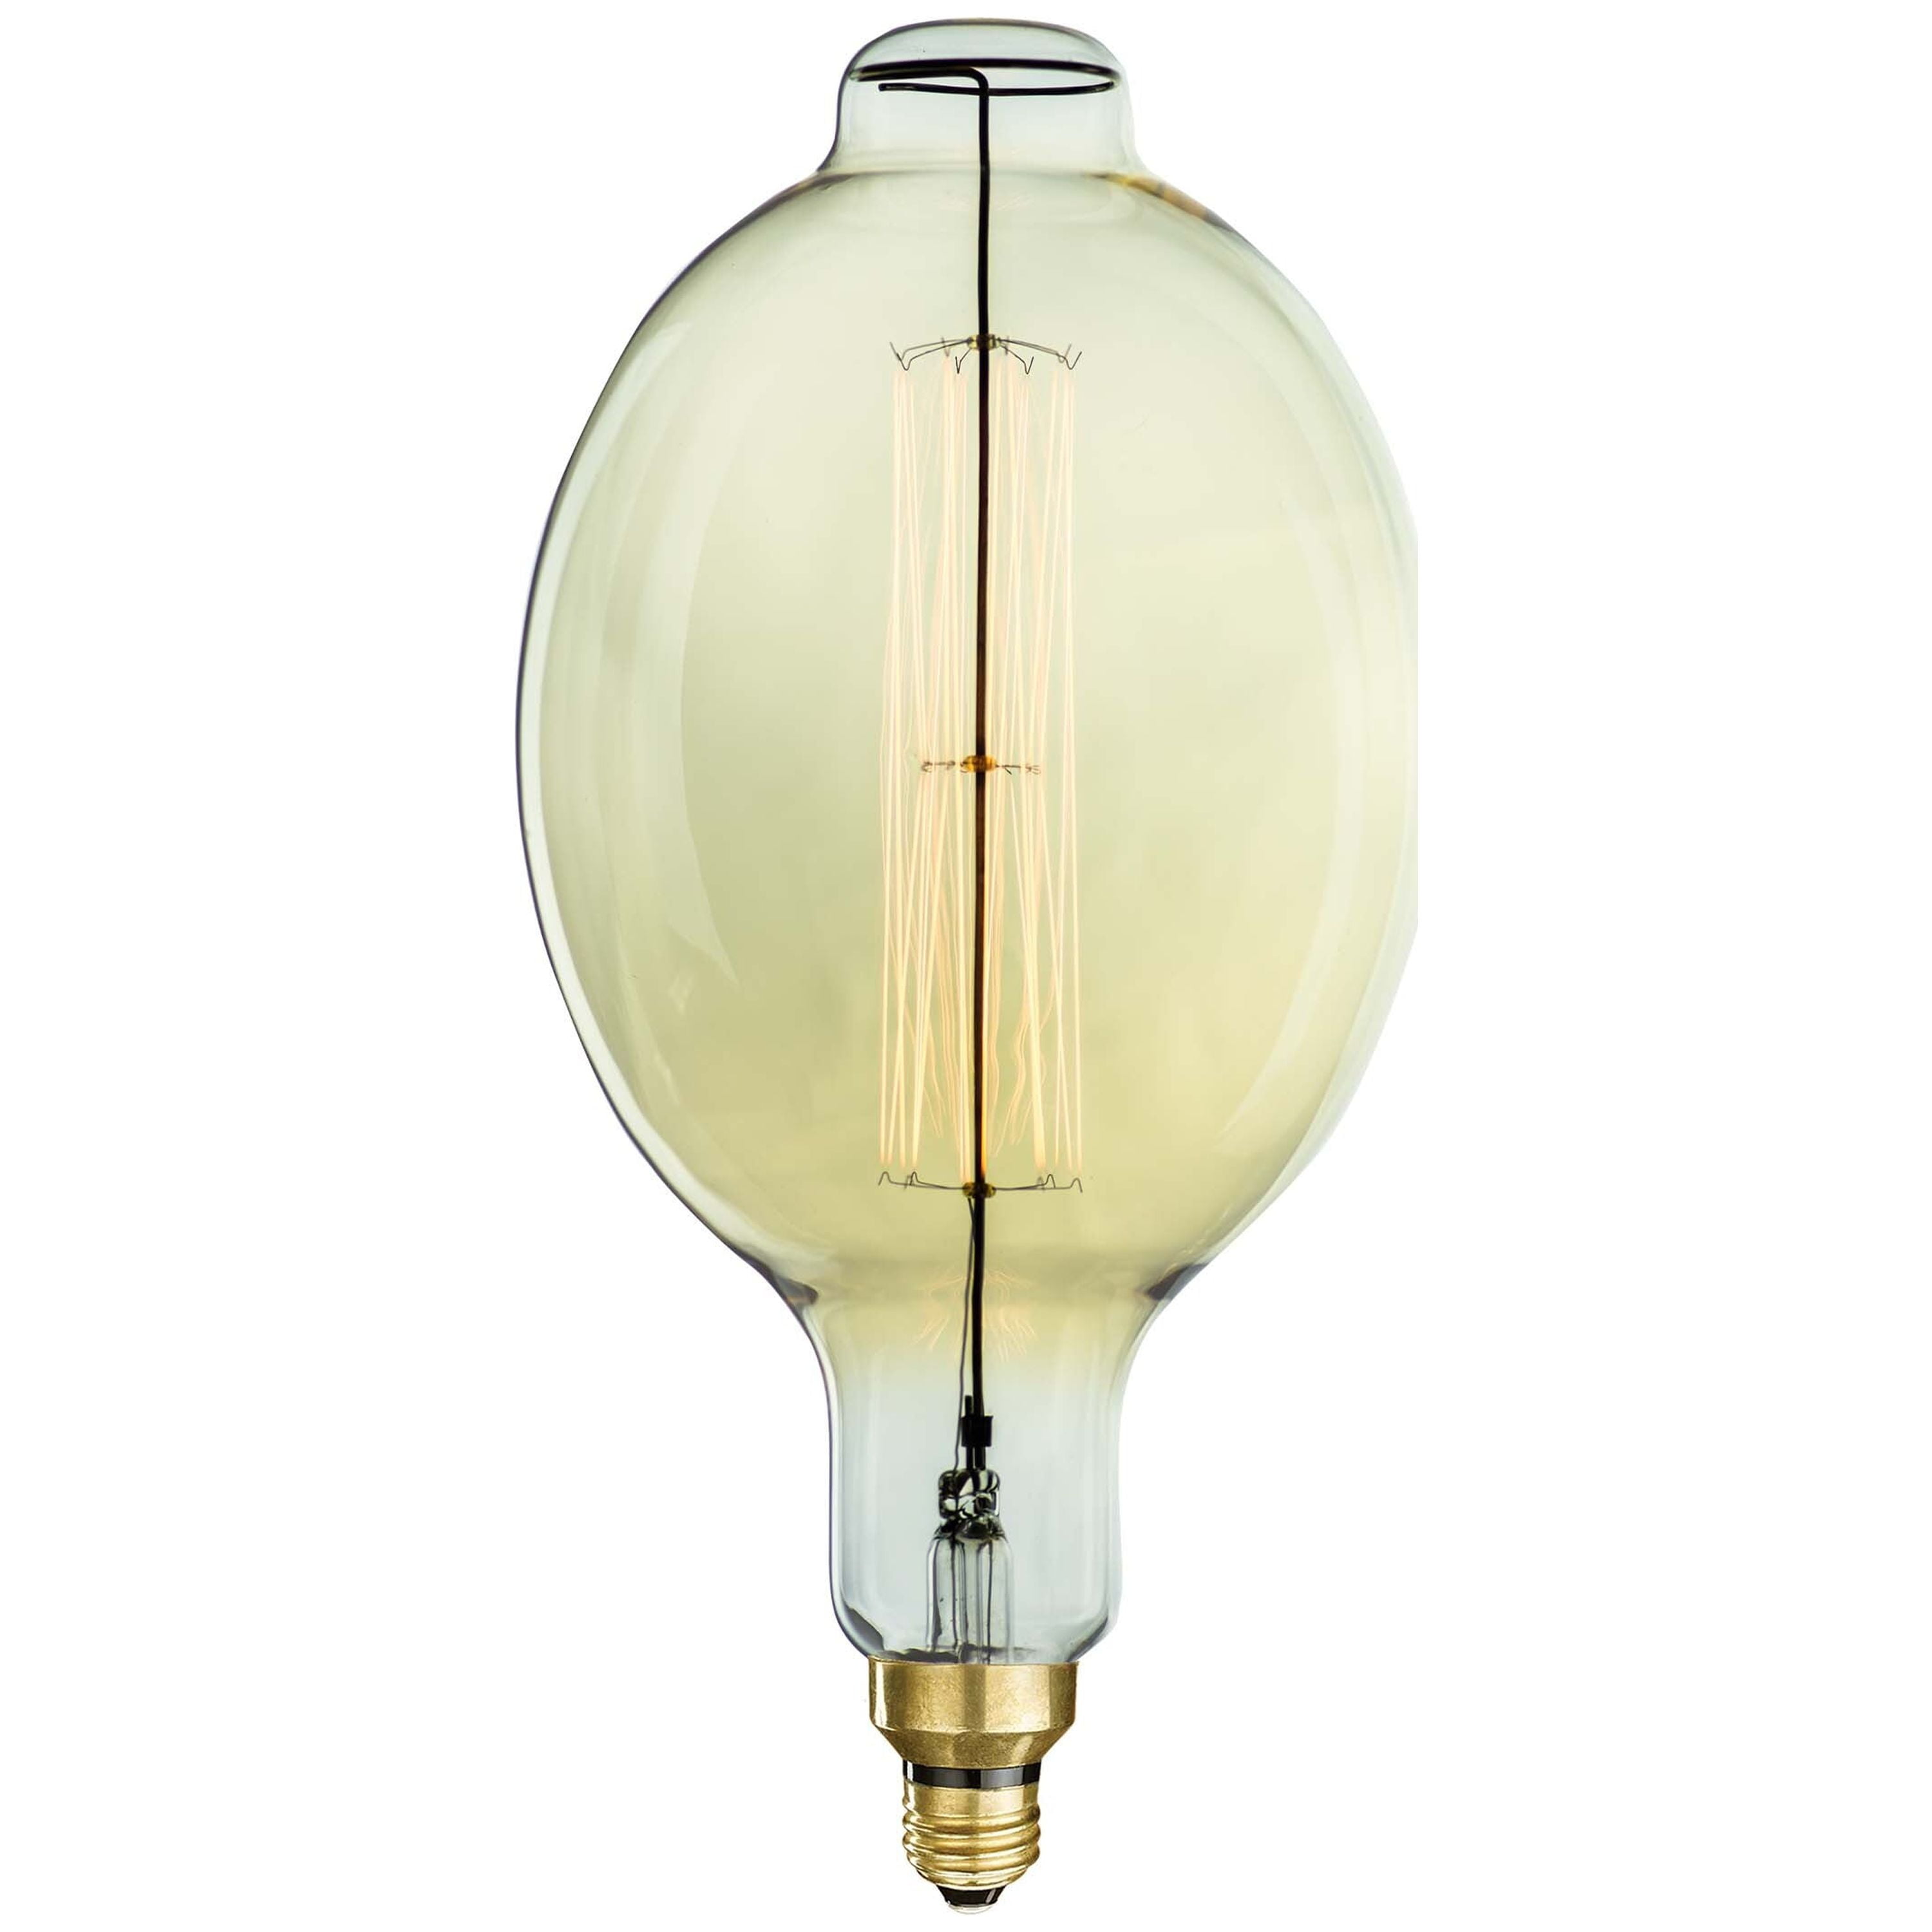 Picture of Bulbrite Grand Nostalgic Collection 60 Watt Dimmable BT56  Shape Oversized Decorative Incandescent Light Bulb with Medium (E26) Base  2200K Amber Light  Antique Glass Finish